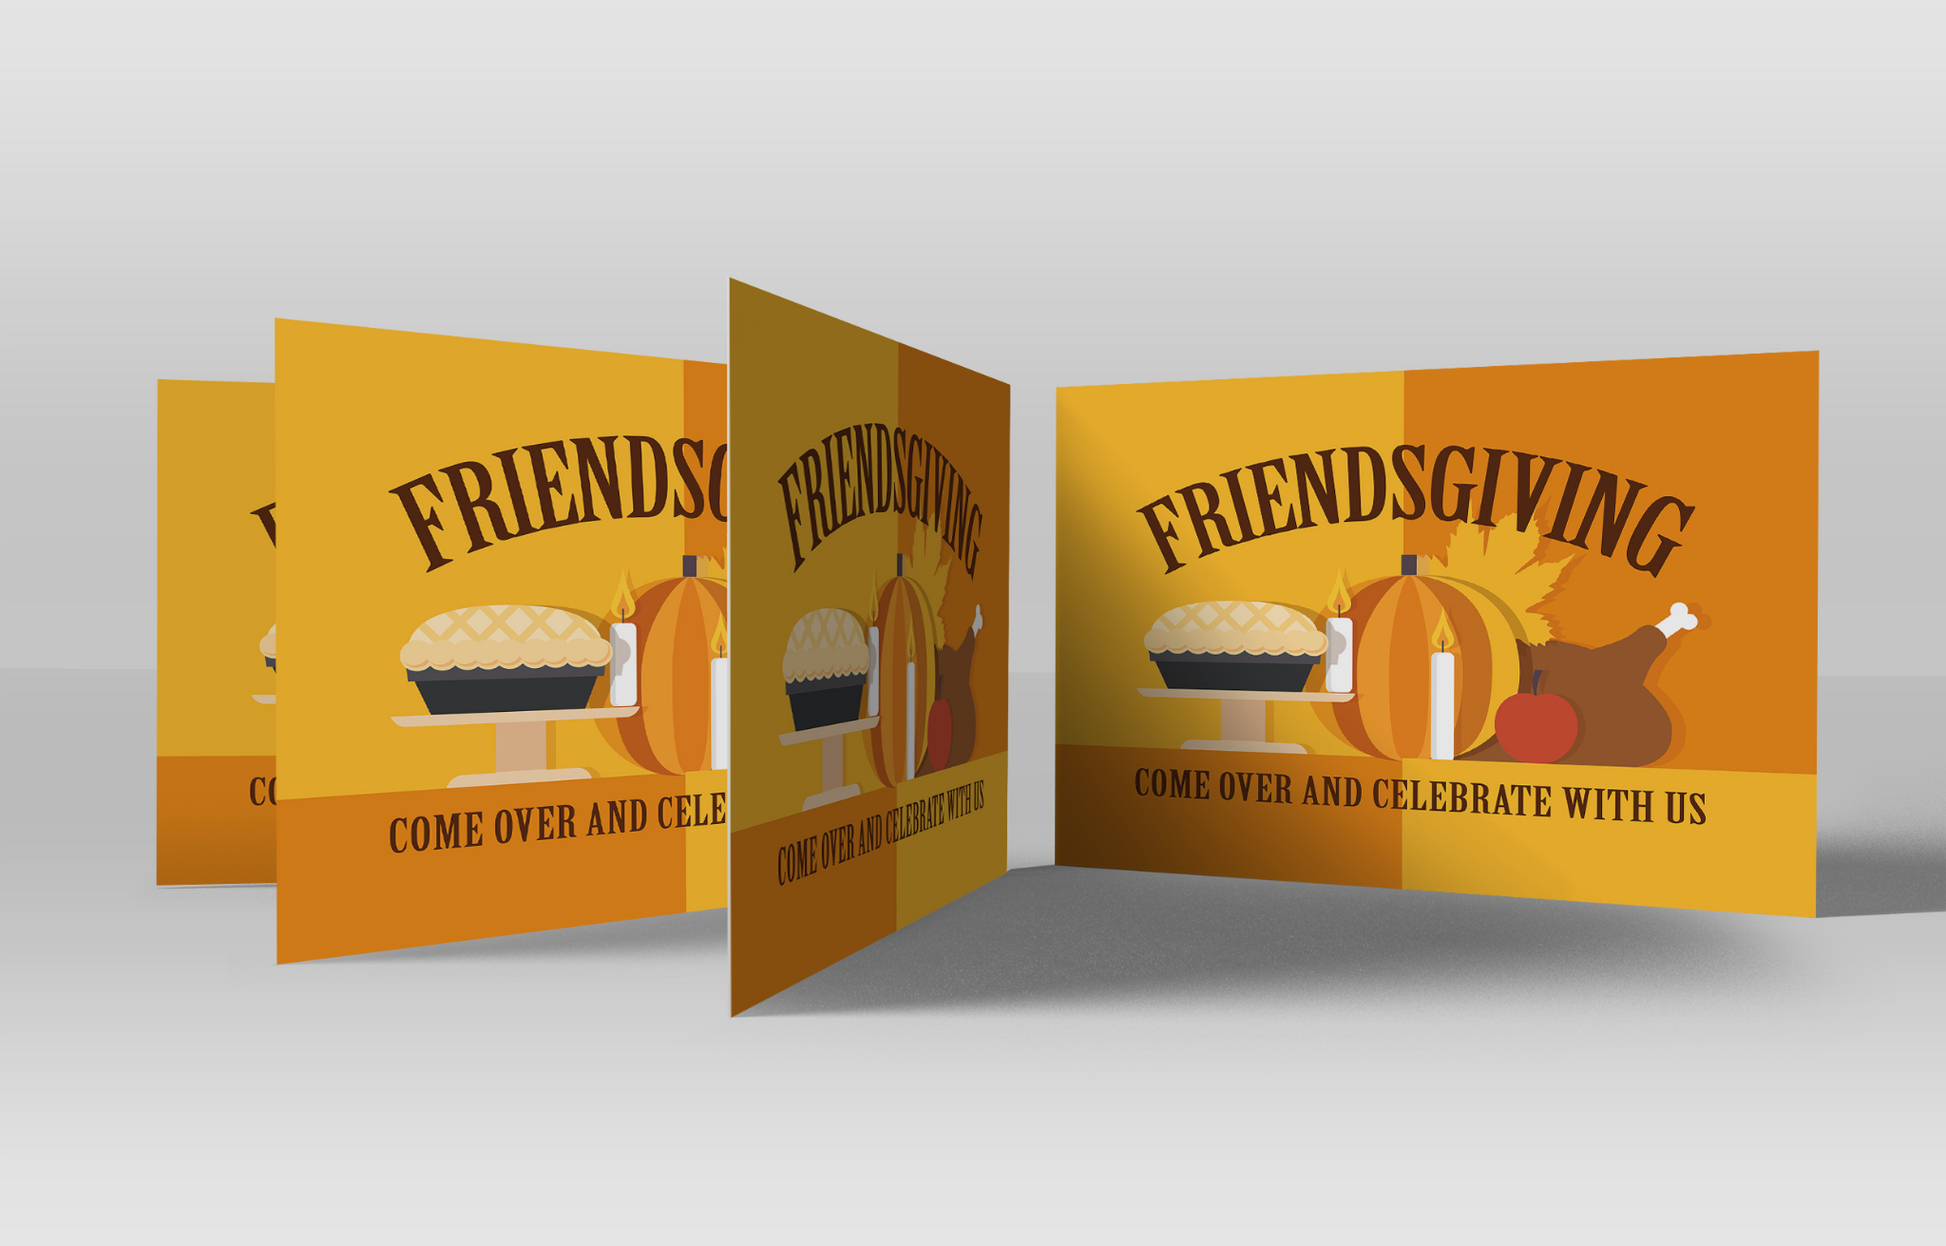 Friendsgiving Invitation Postcard Invitations - Note Card Invitations For Friendsgiving 5 or 10 Postcard Set.